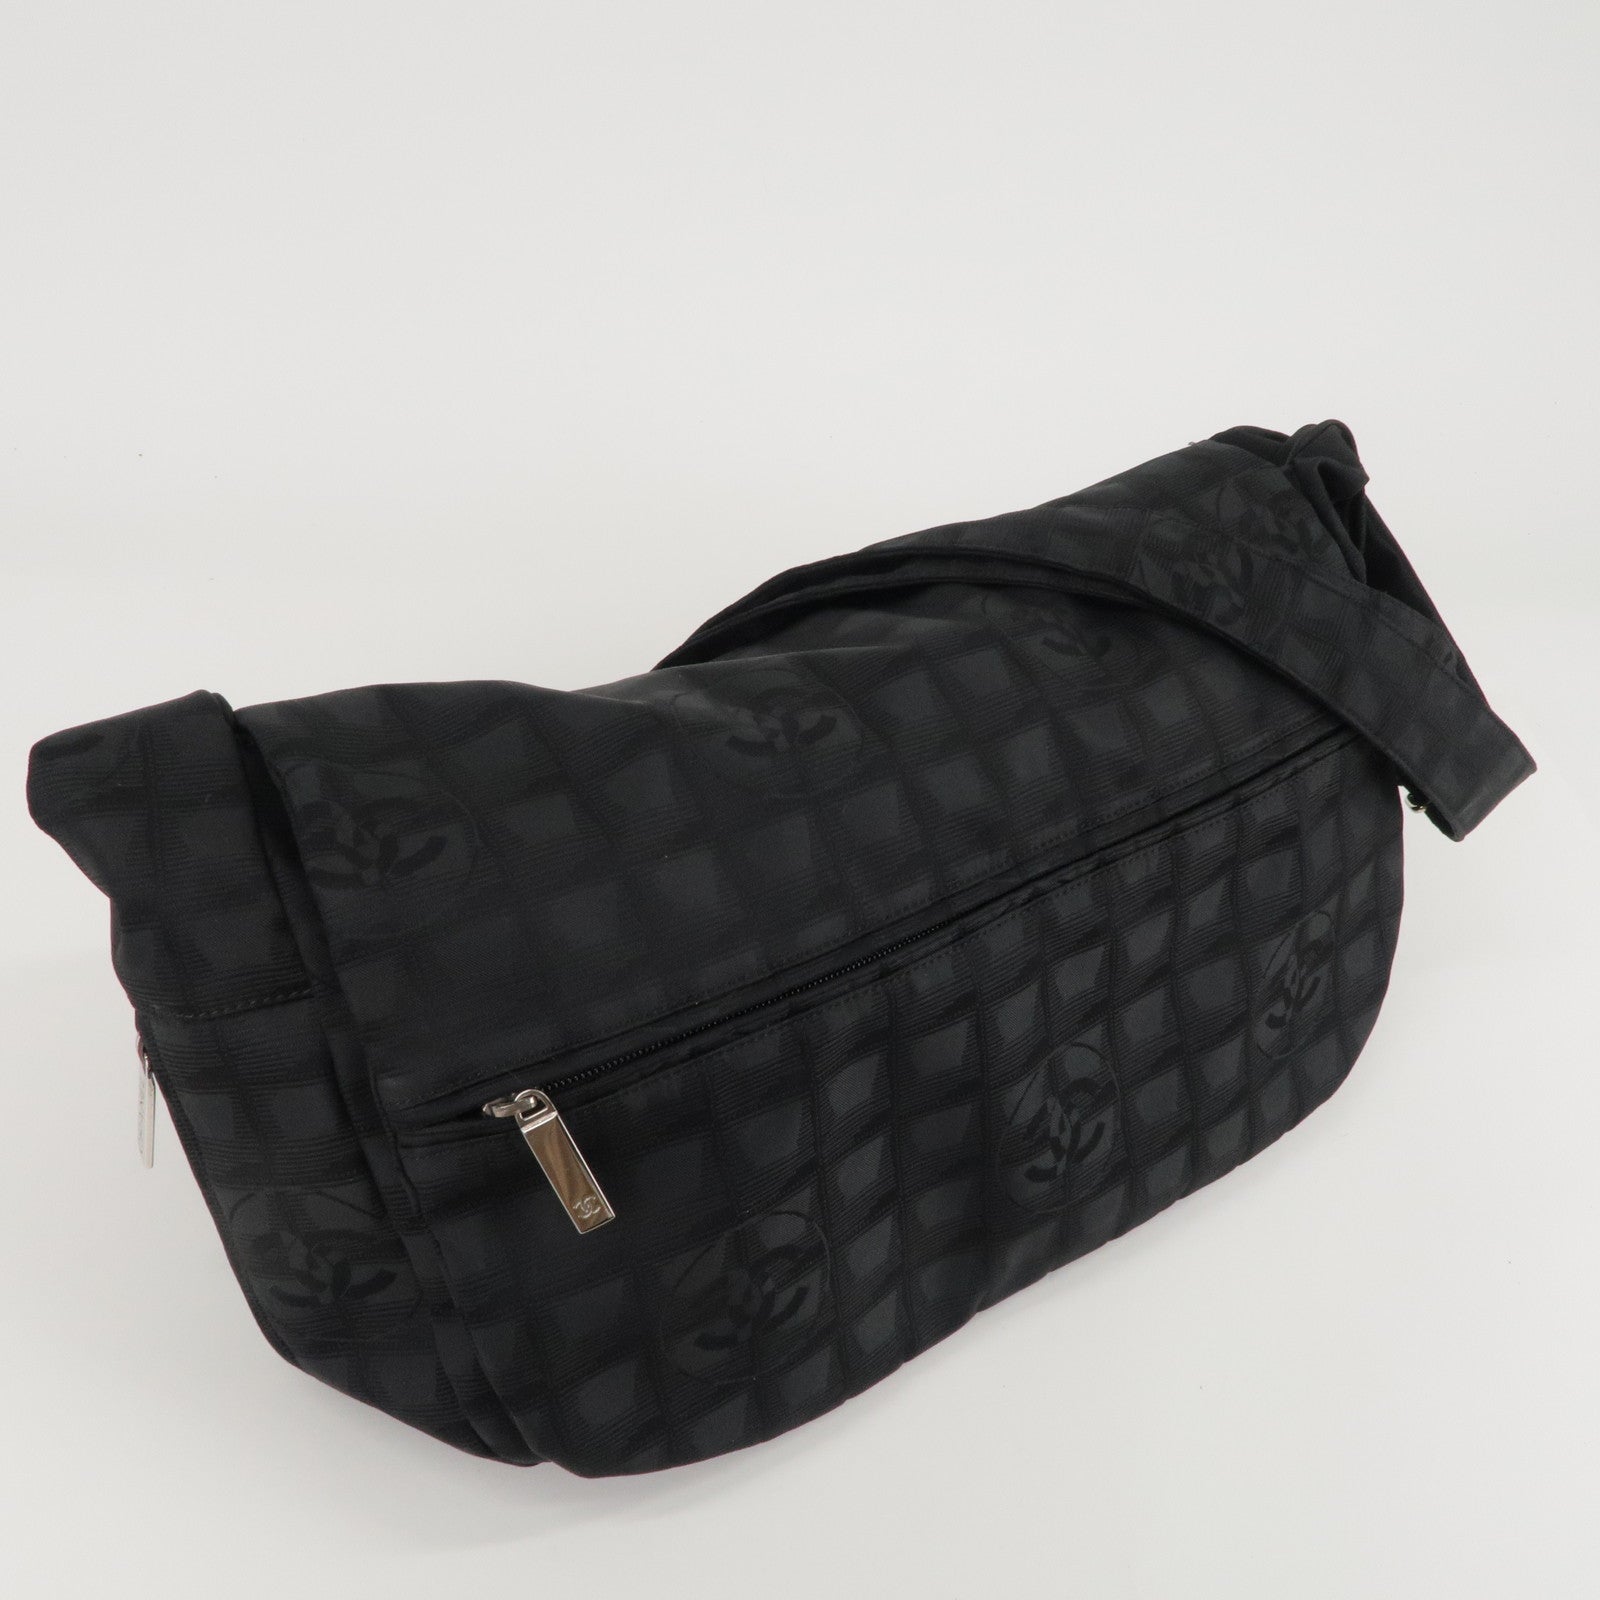 Chanel Chanel Travel Line Black Jacquard Nylon Medium Boston Bag